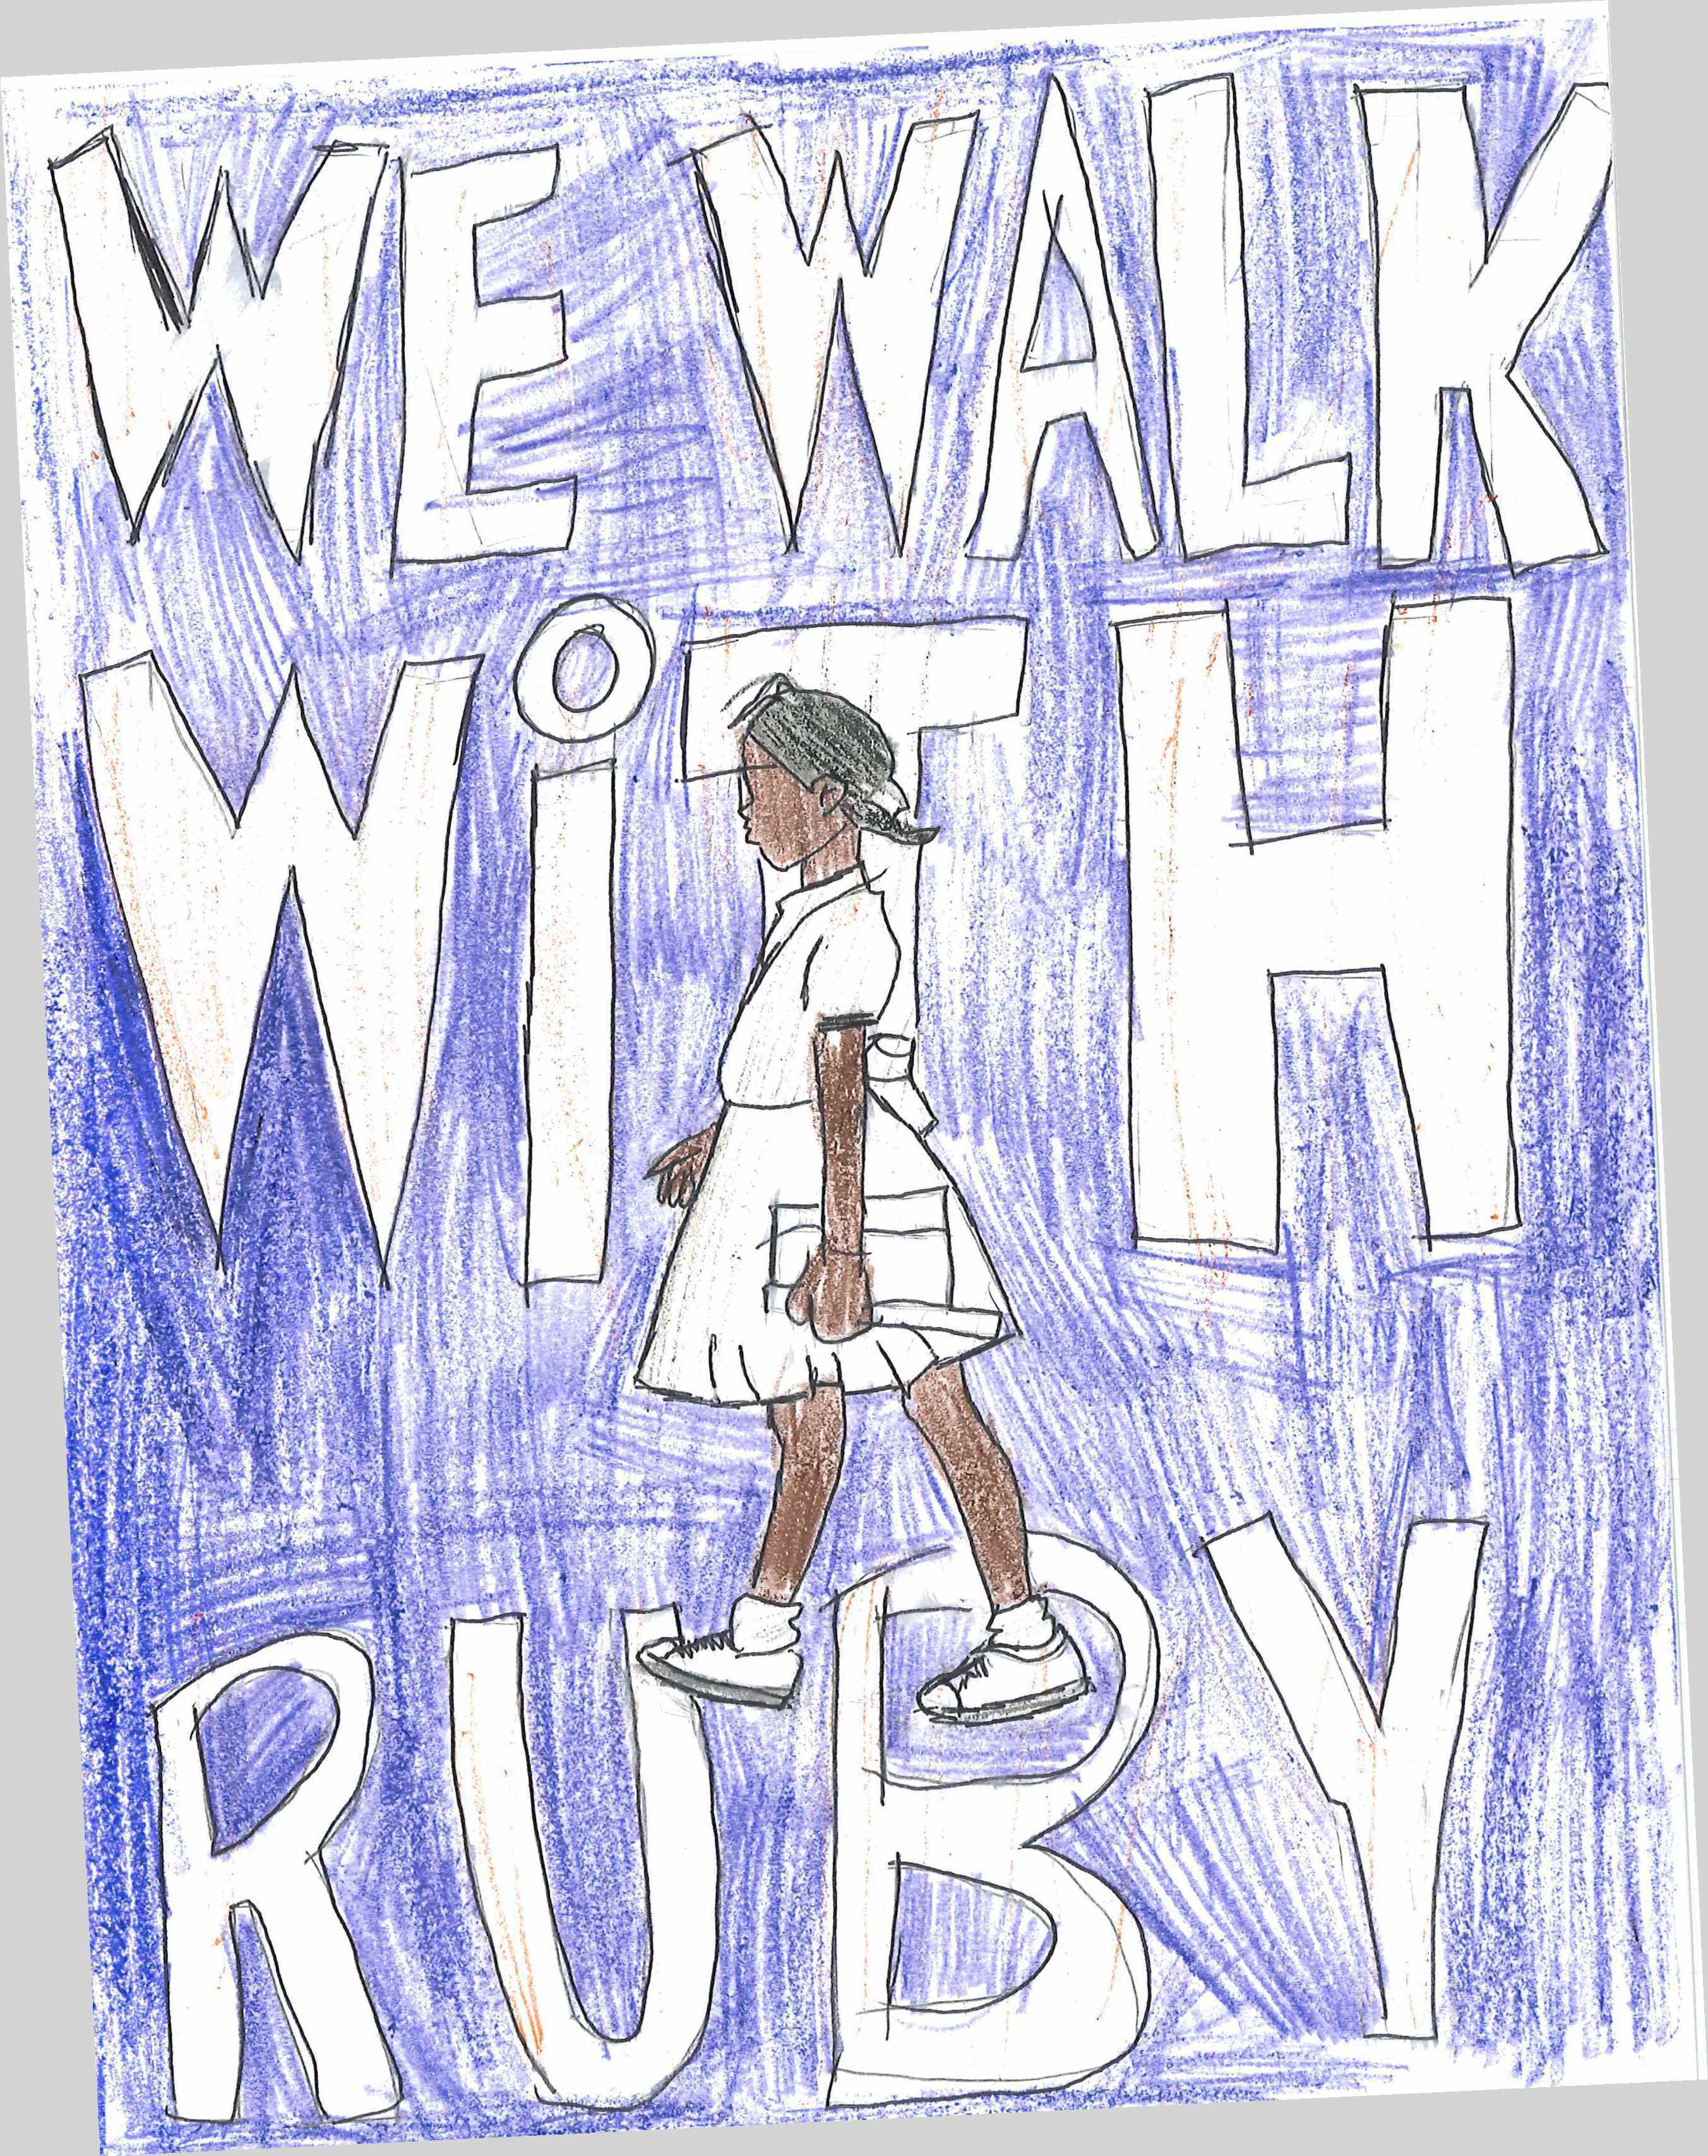 Ruby Bridges Walking to School. 